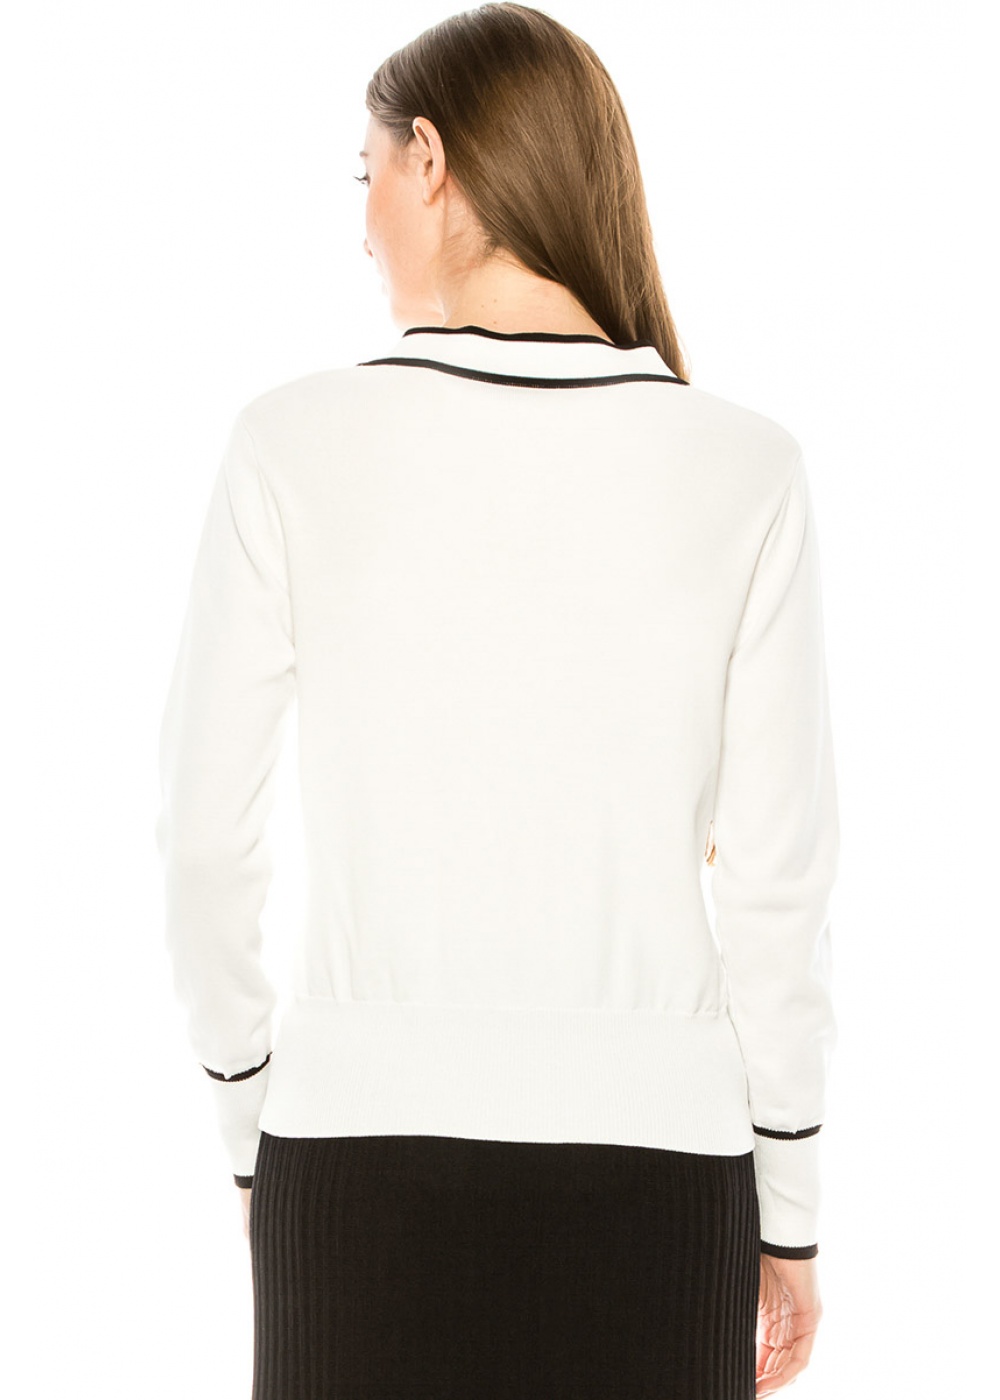 Sweater KA168 White